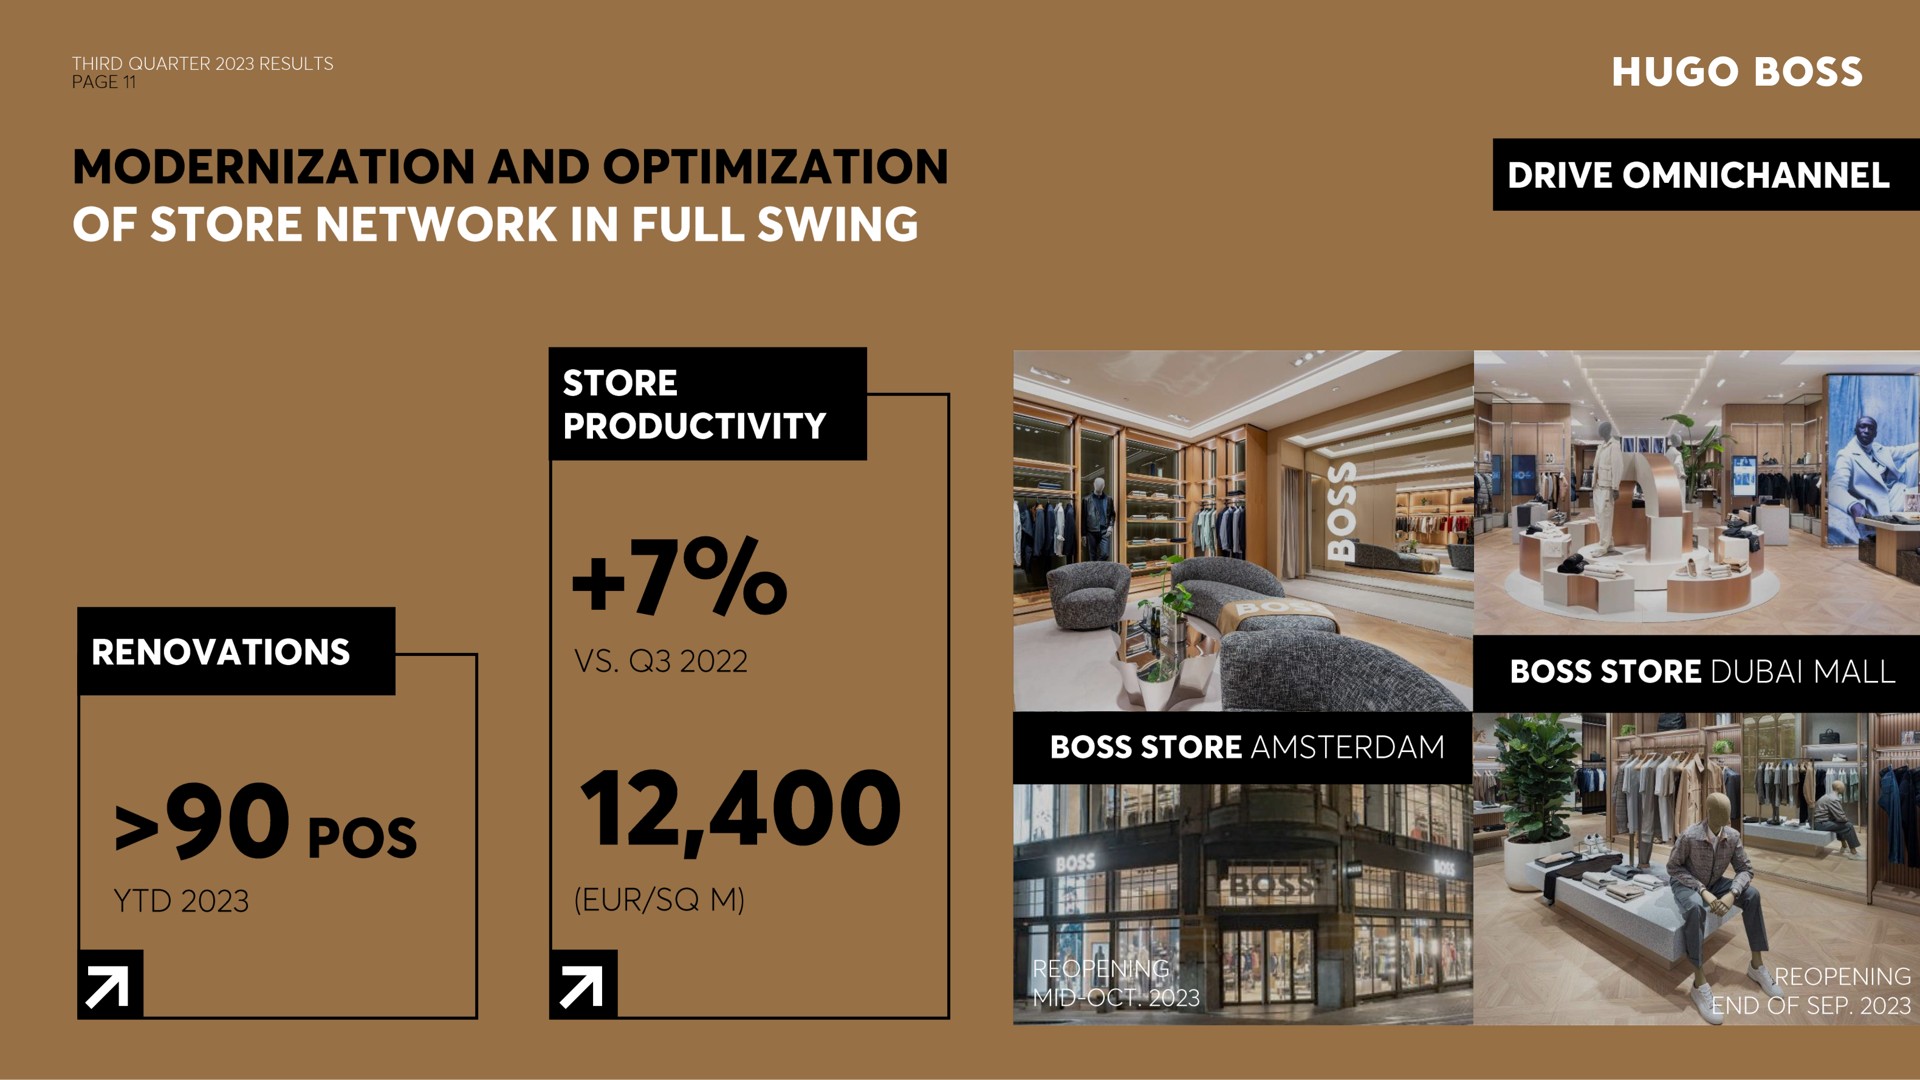 modernization and optimization store productivity renovations pos lee i roll | Hugo Boss